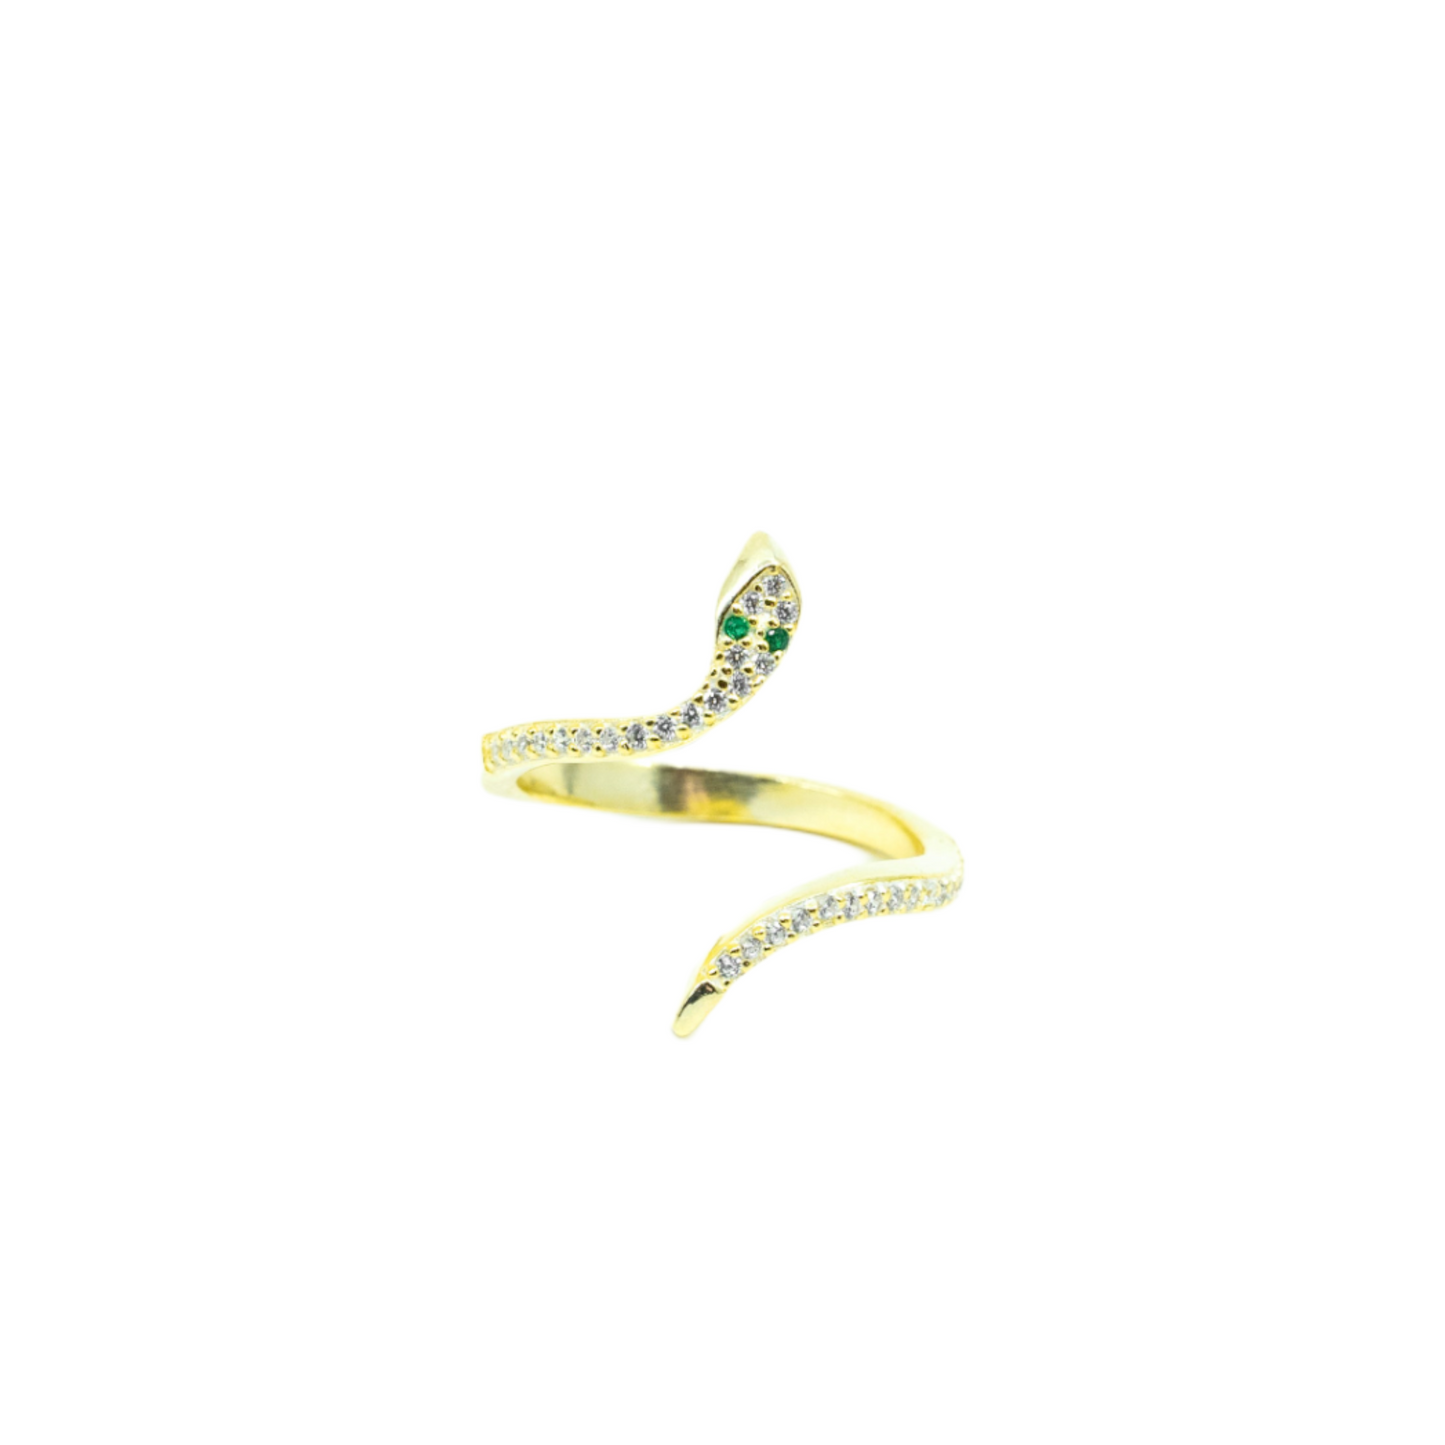 Gold Snake Ring With Emerald Eyes - shopzeyzey